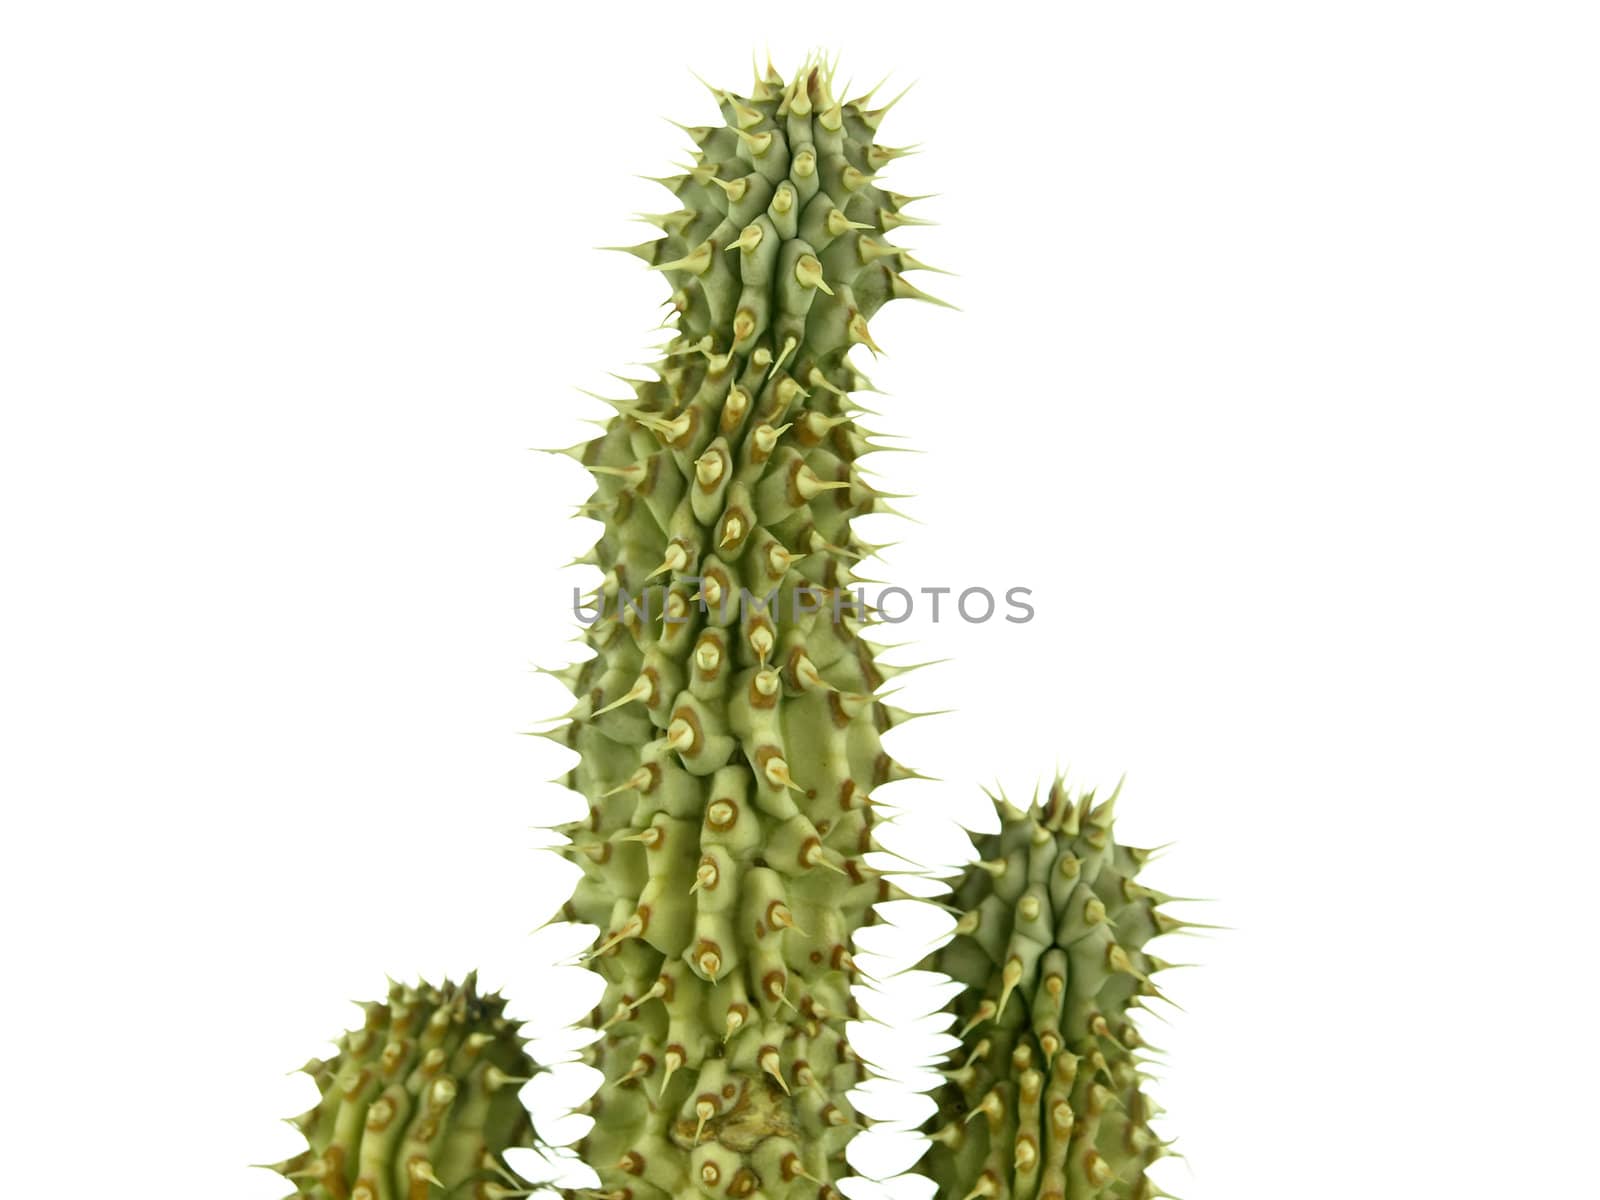 Hoodia gordonii the famous cactus for diet